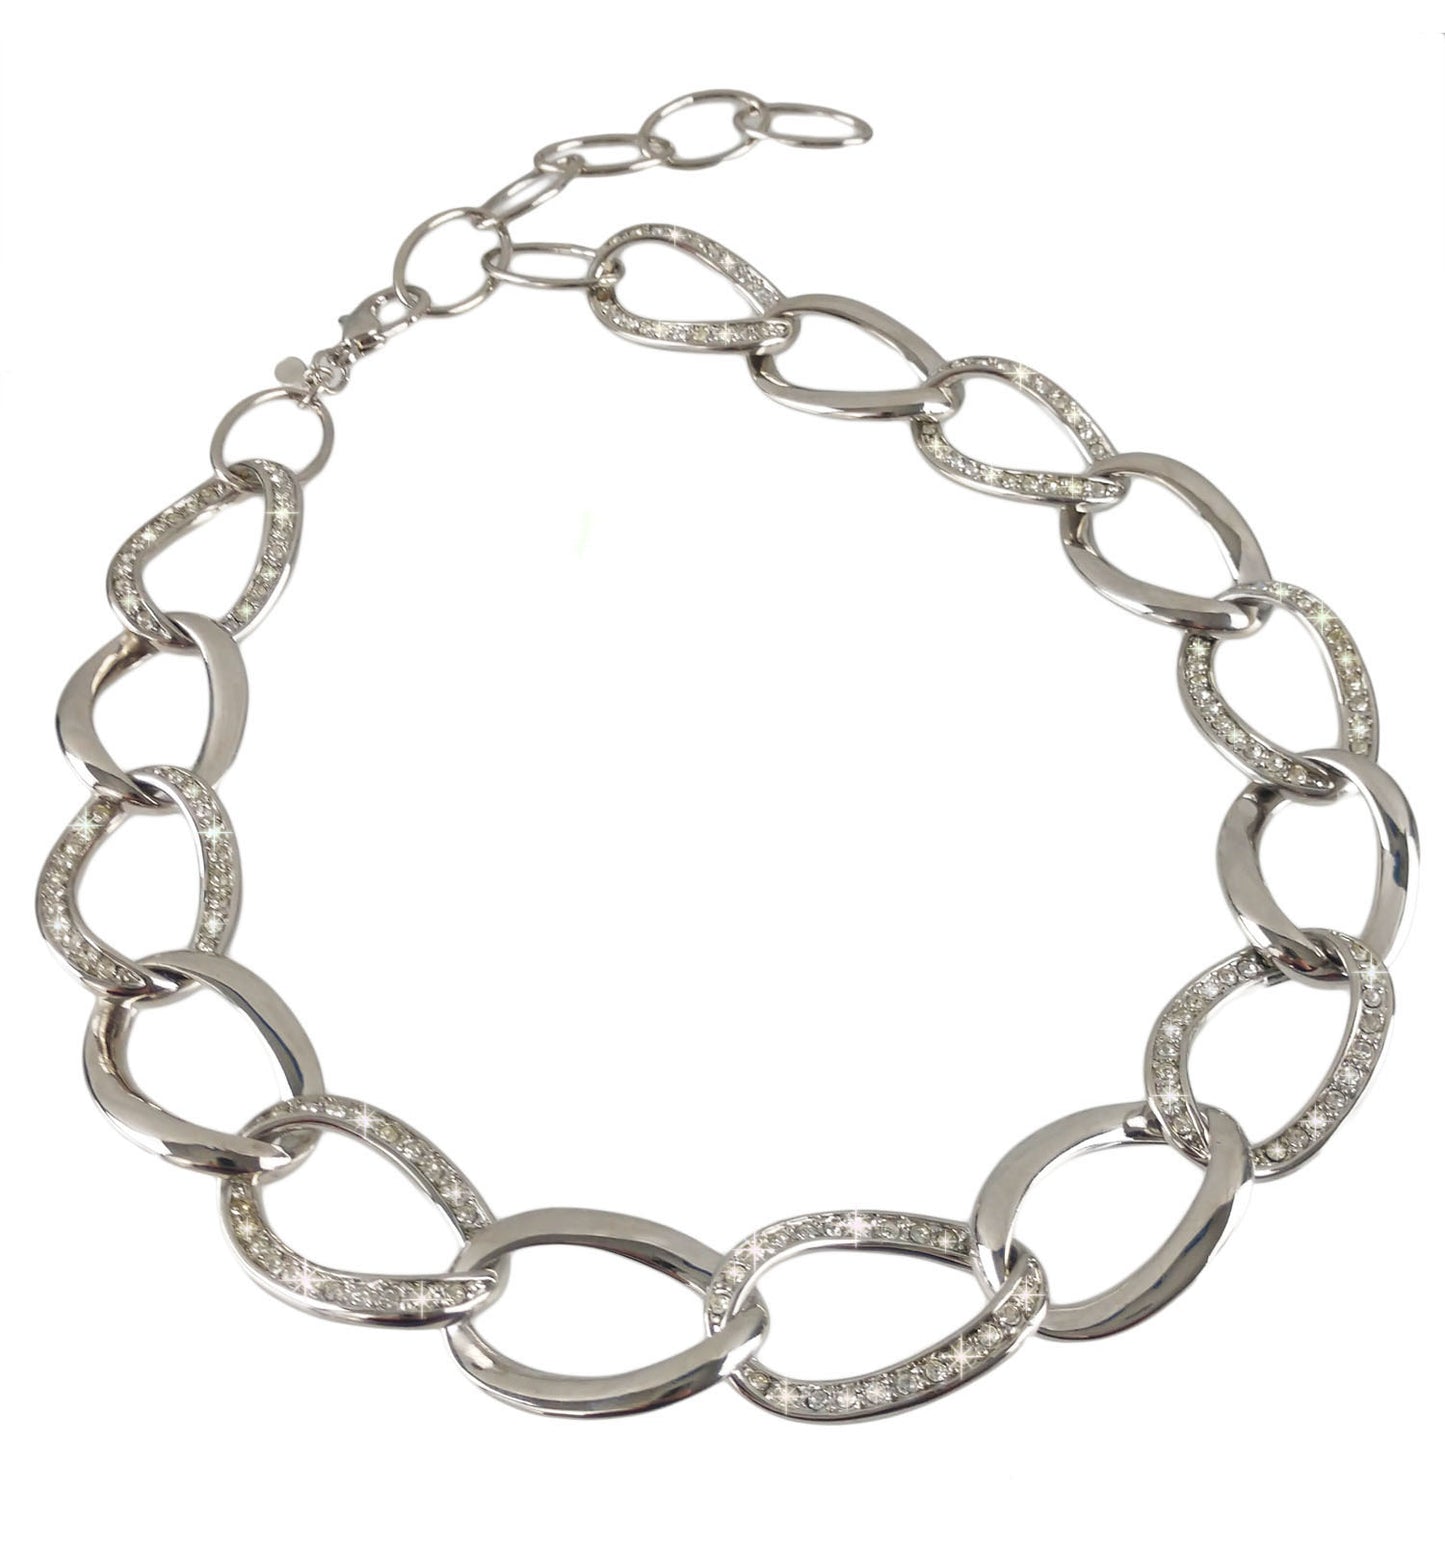 Premier Designs Large Silver Tone Crystal Punk Chain Link Necklace NWOT 16-19.5"